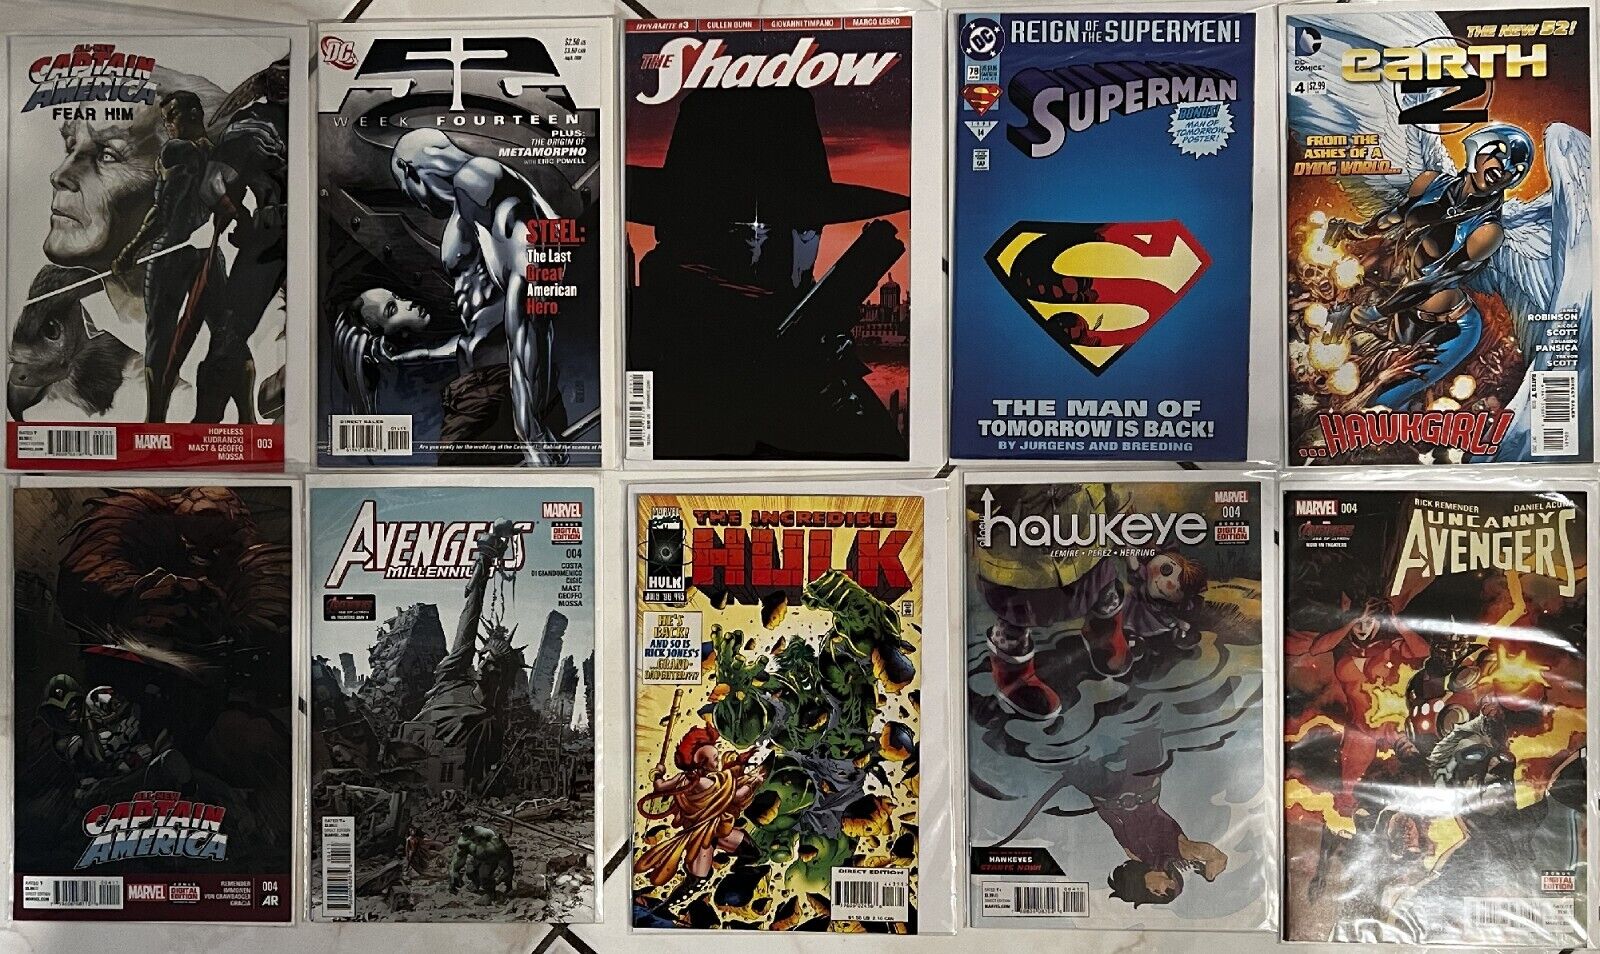 10 Comics Captain America Hulk Avengers Superman 52 Shadow Earth 2 and More